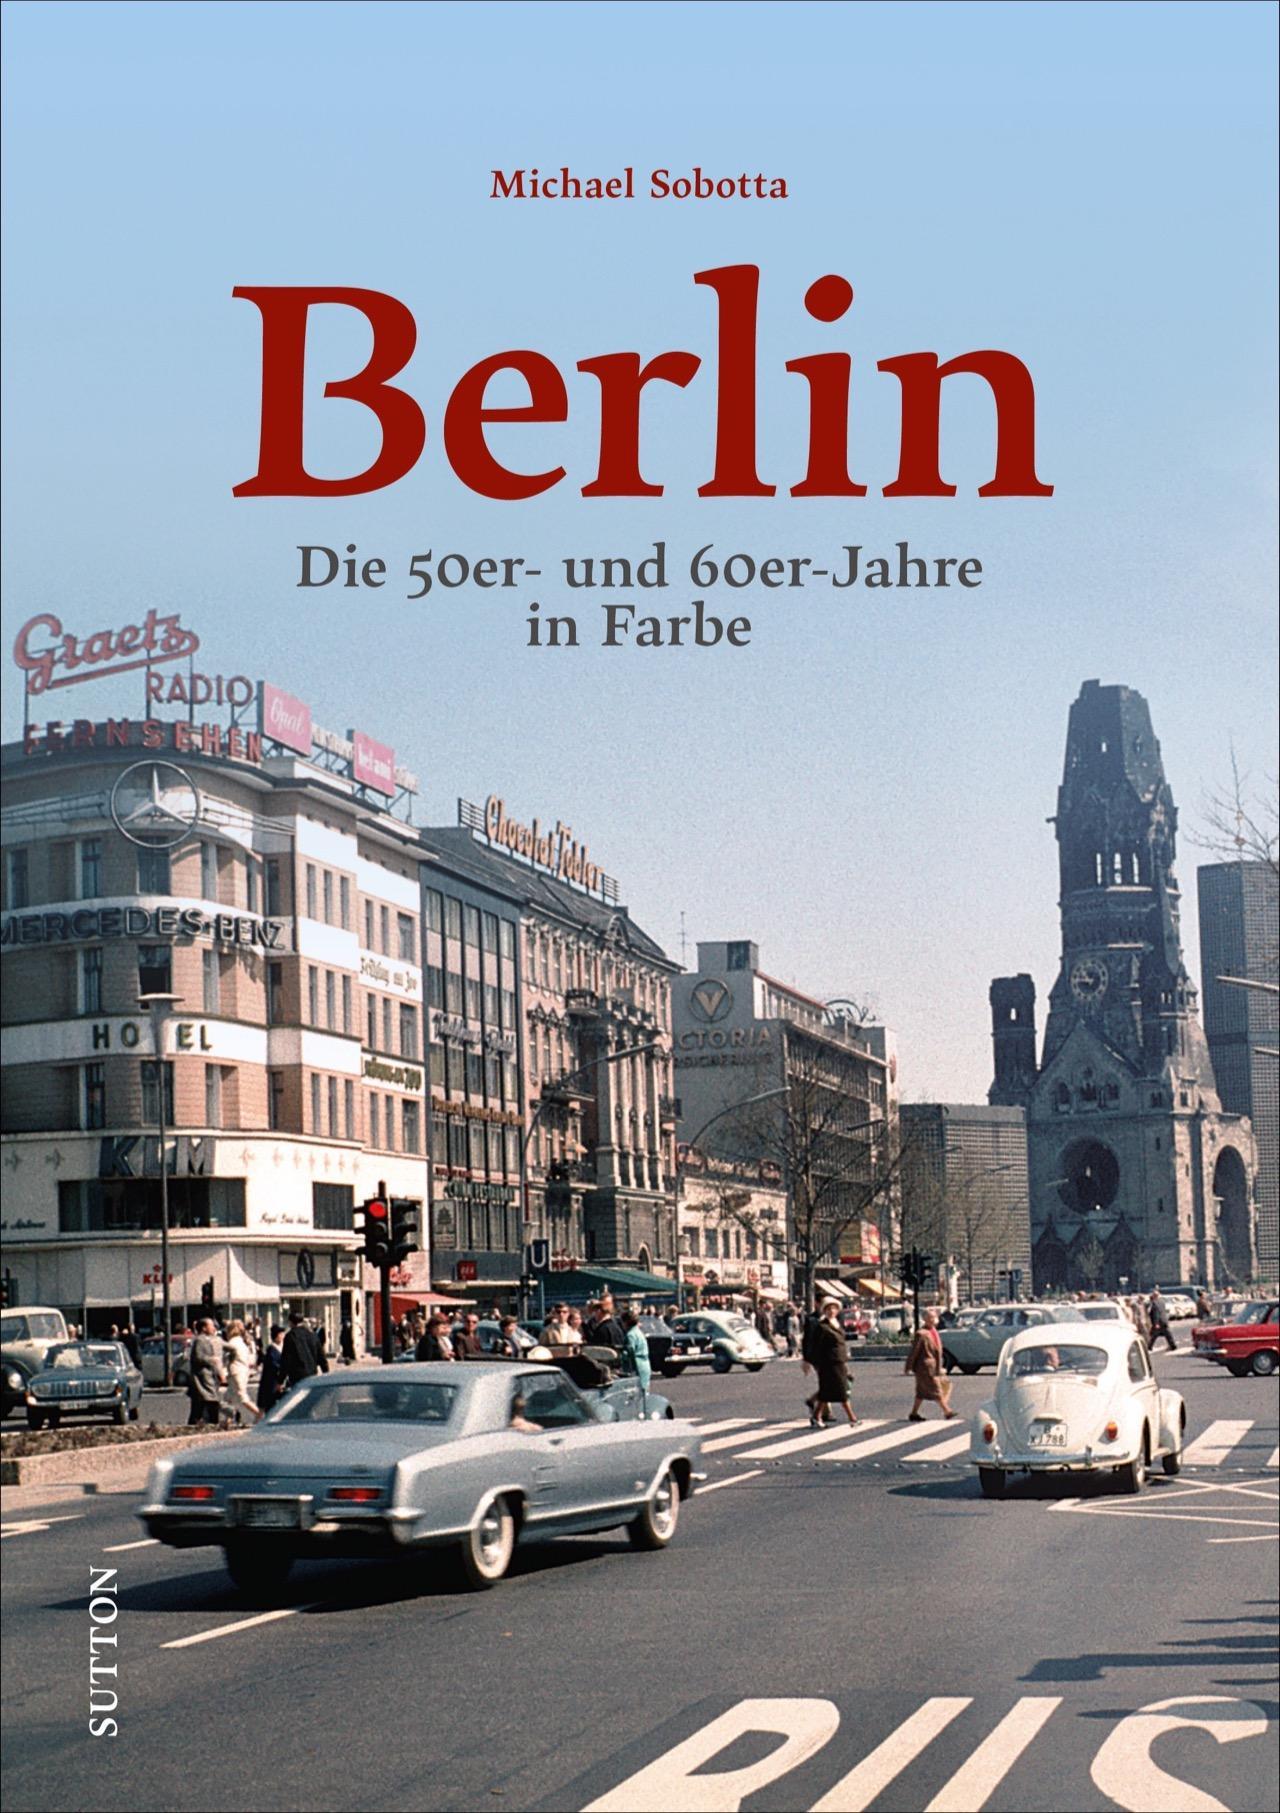 BERLIN NEUKÖLLN Stadt Geschichte Bildband Bilder Fotos Buch Book Archivbilder AK 